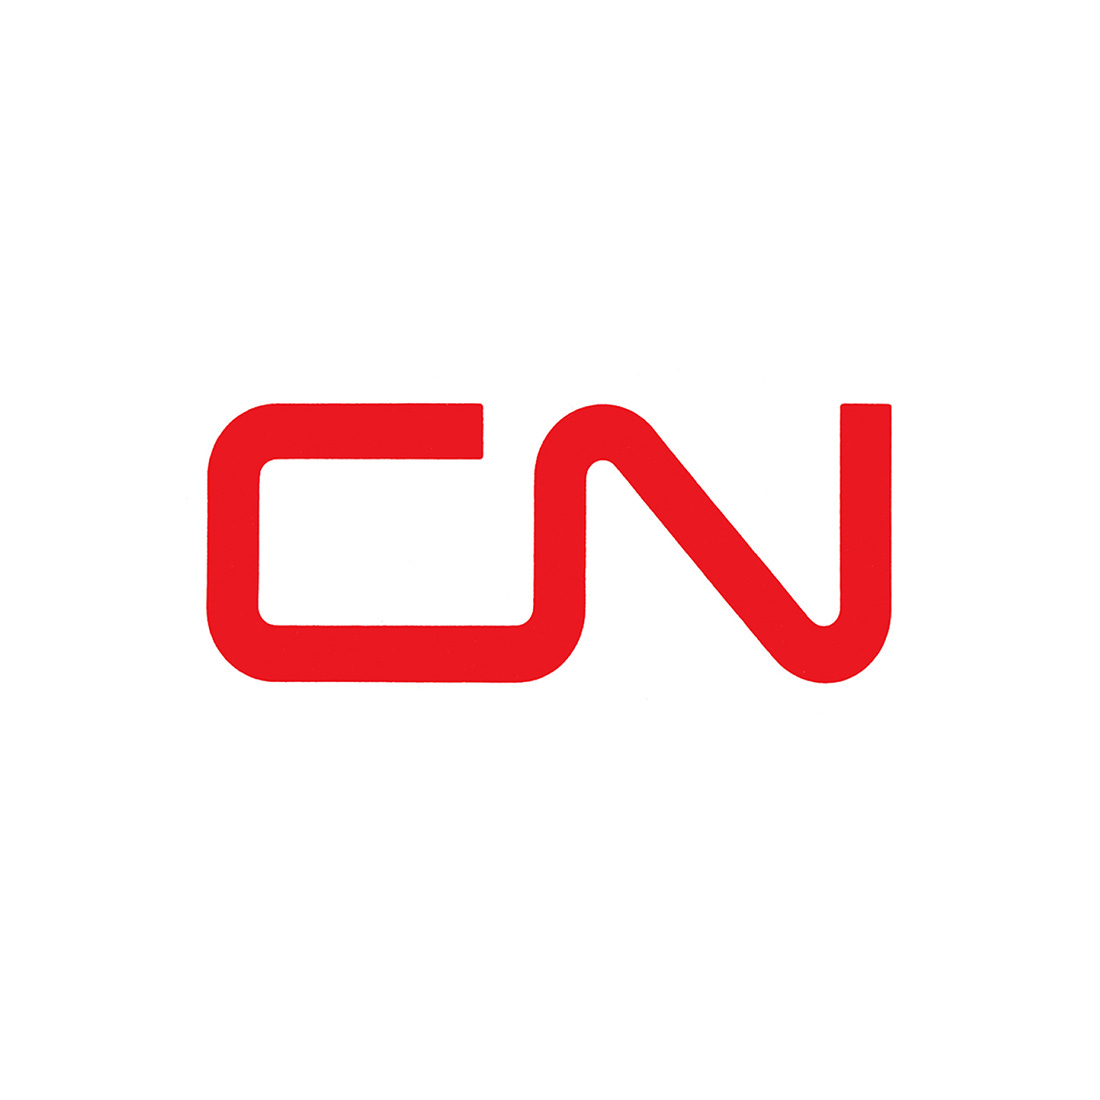 Canadian National Railway logo by Allan Fleming, 1960